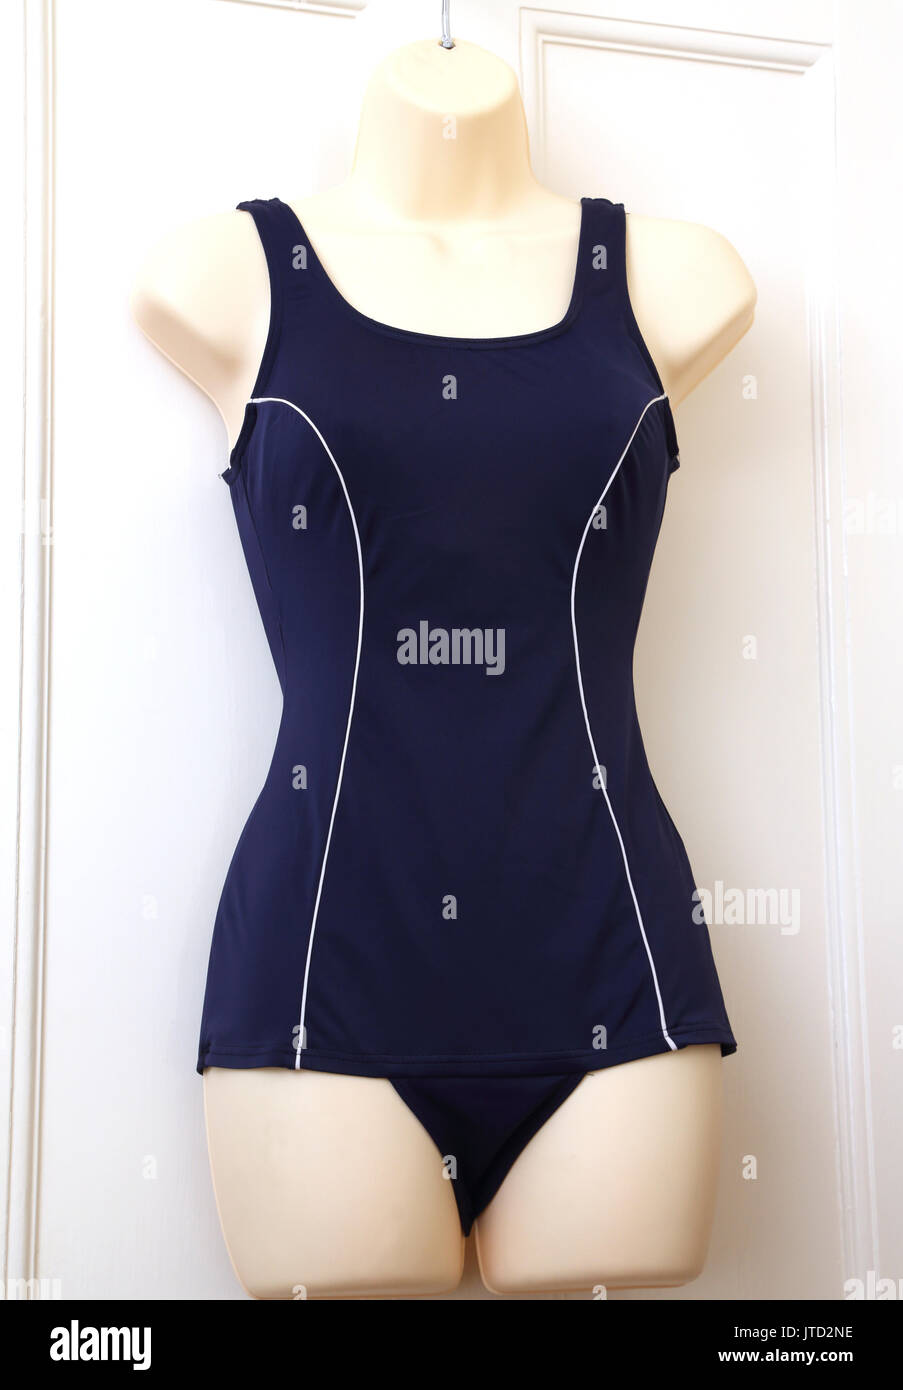 Vintage Navy Blue Swimming Costume Stock Photo